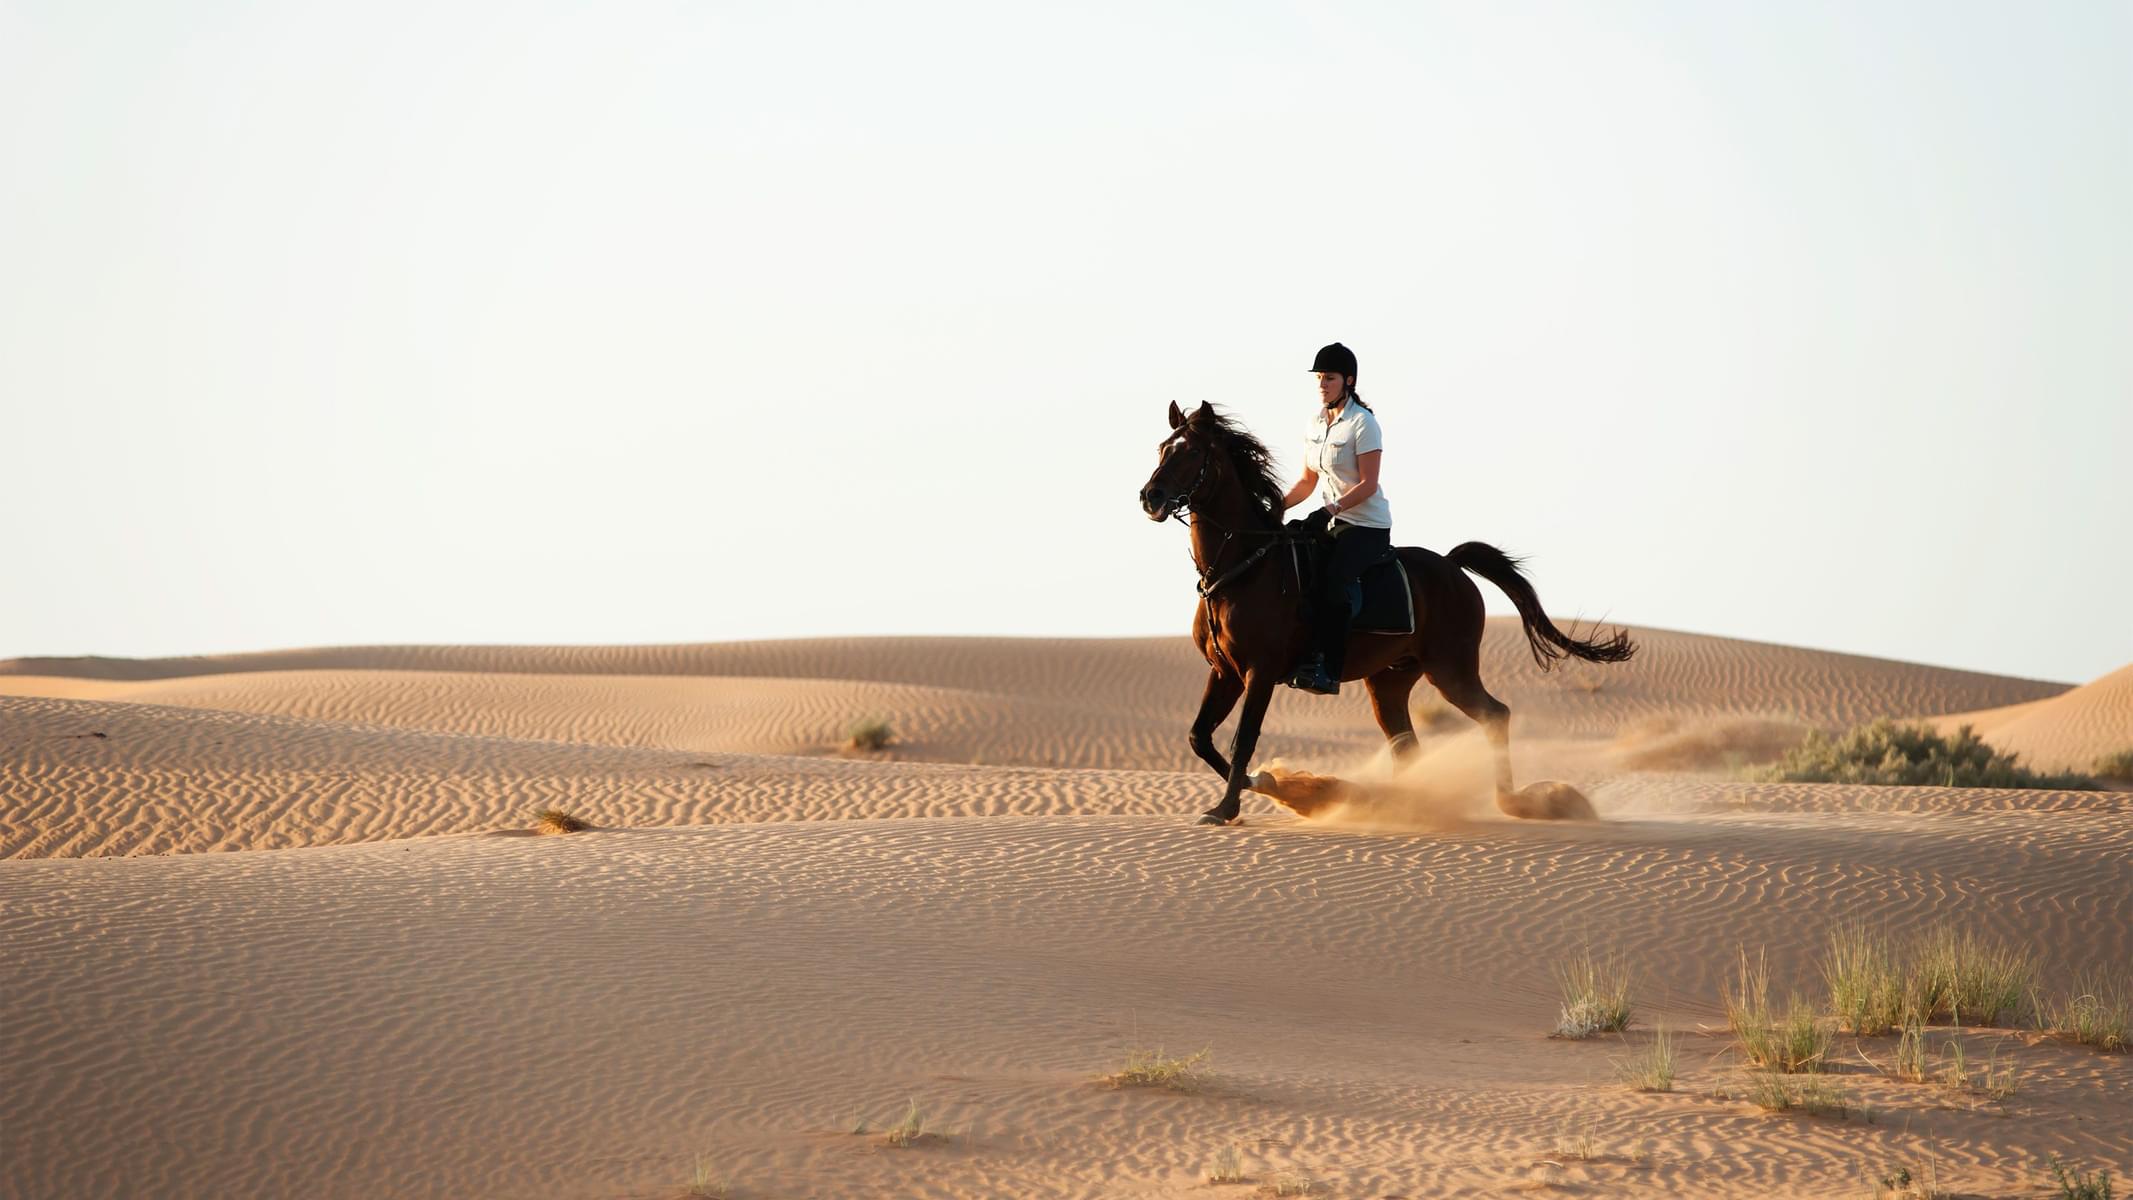 Try horse riding in the desert.